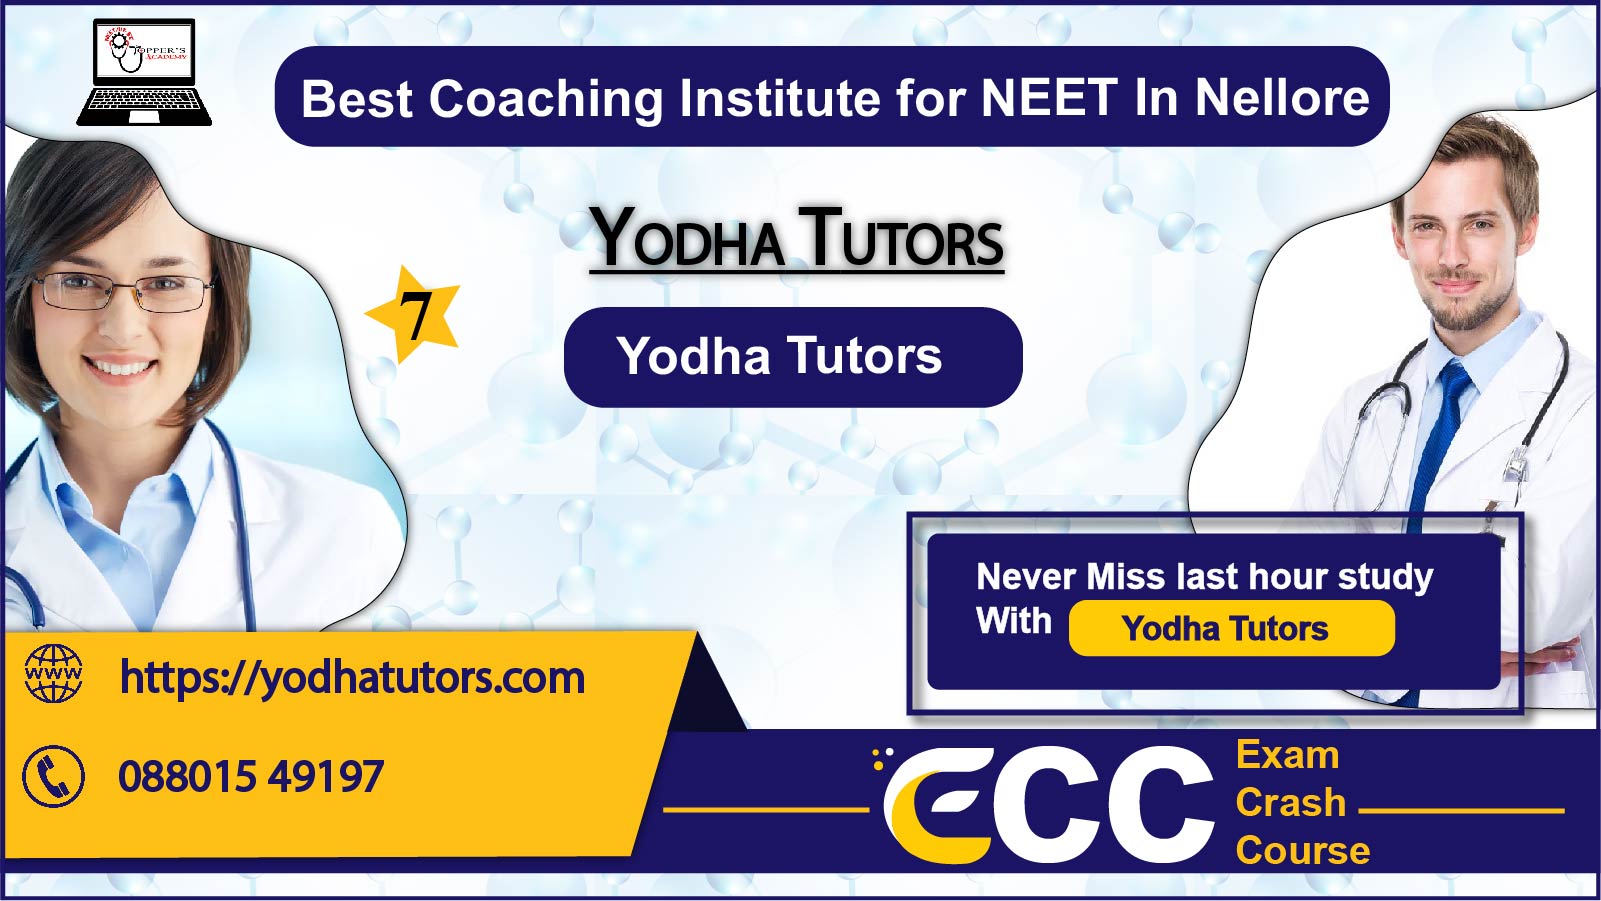 Yodha Tutors NEET Coaching In Nellore